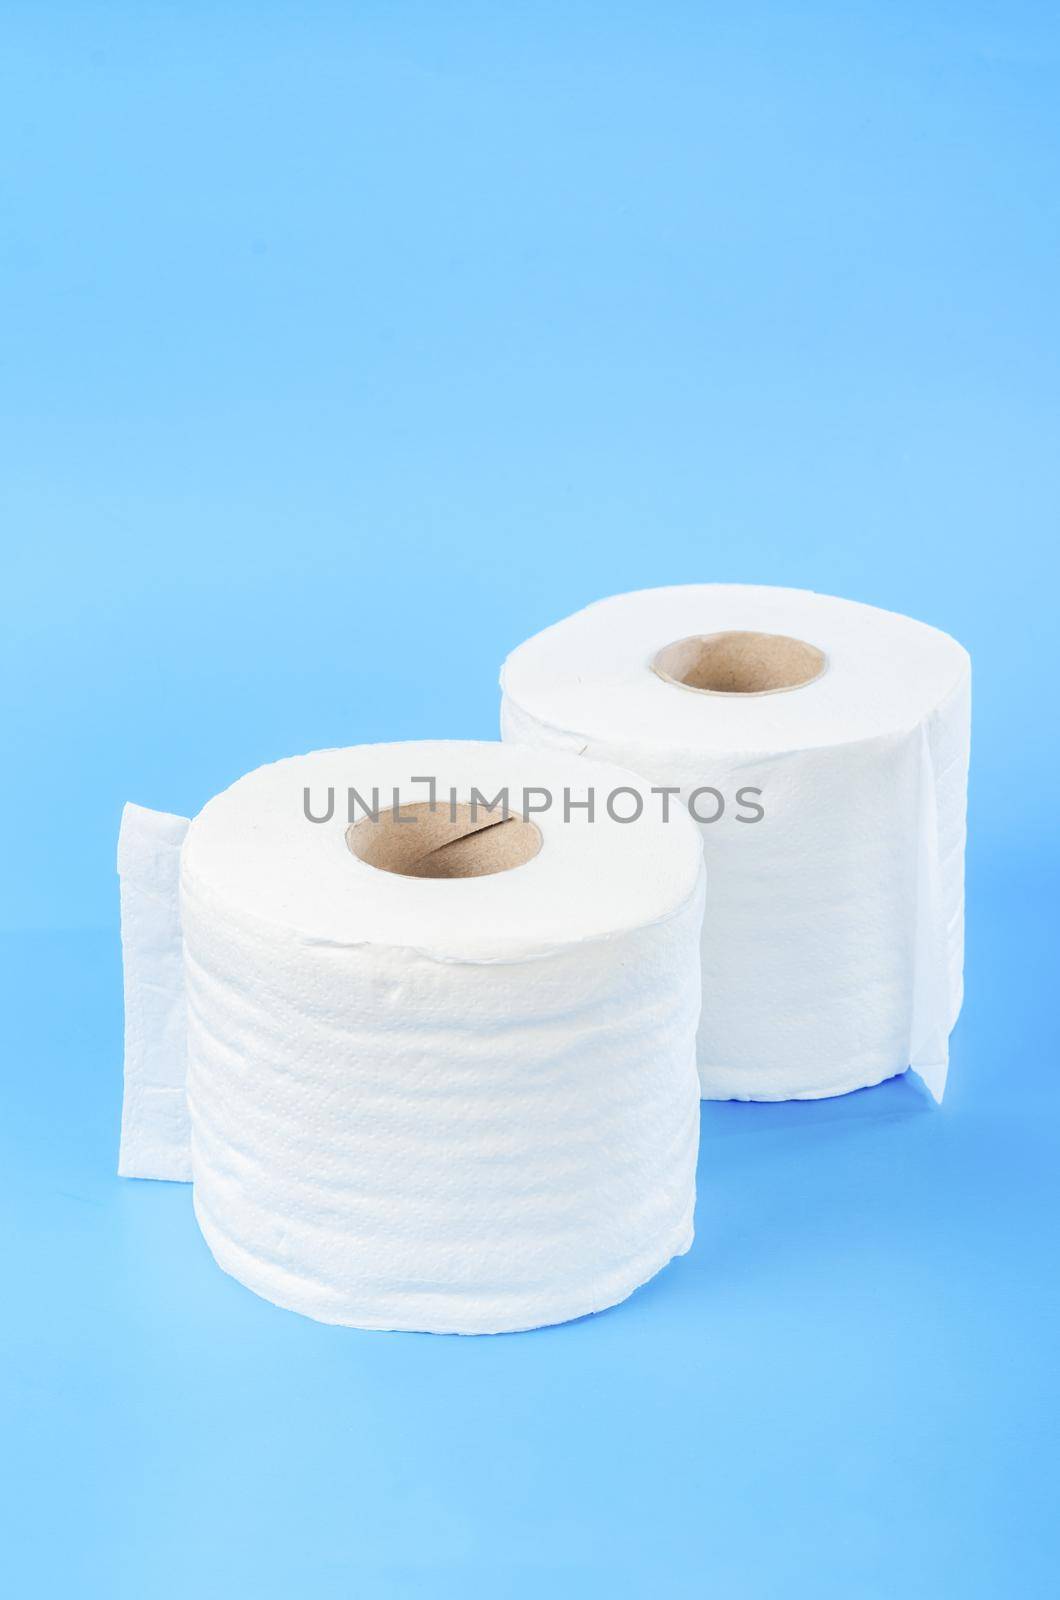 Tissue paper rolls on blue background.